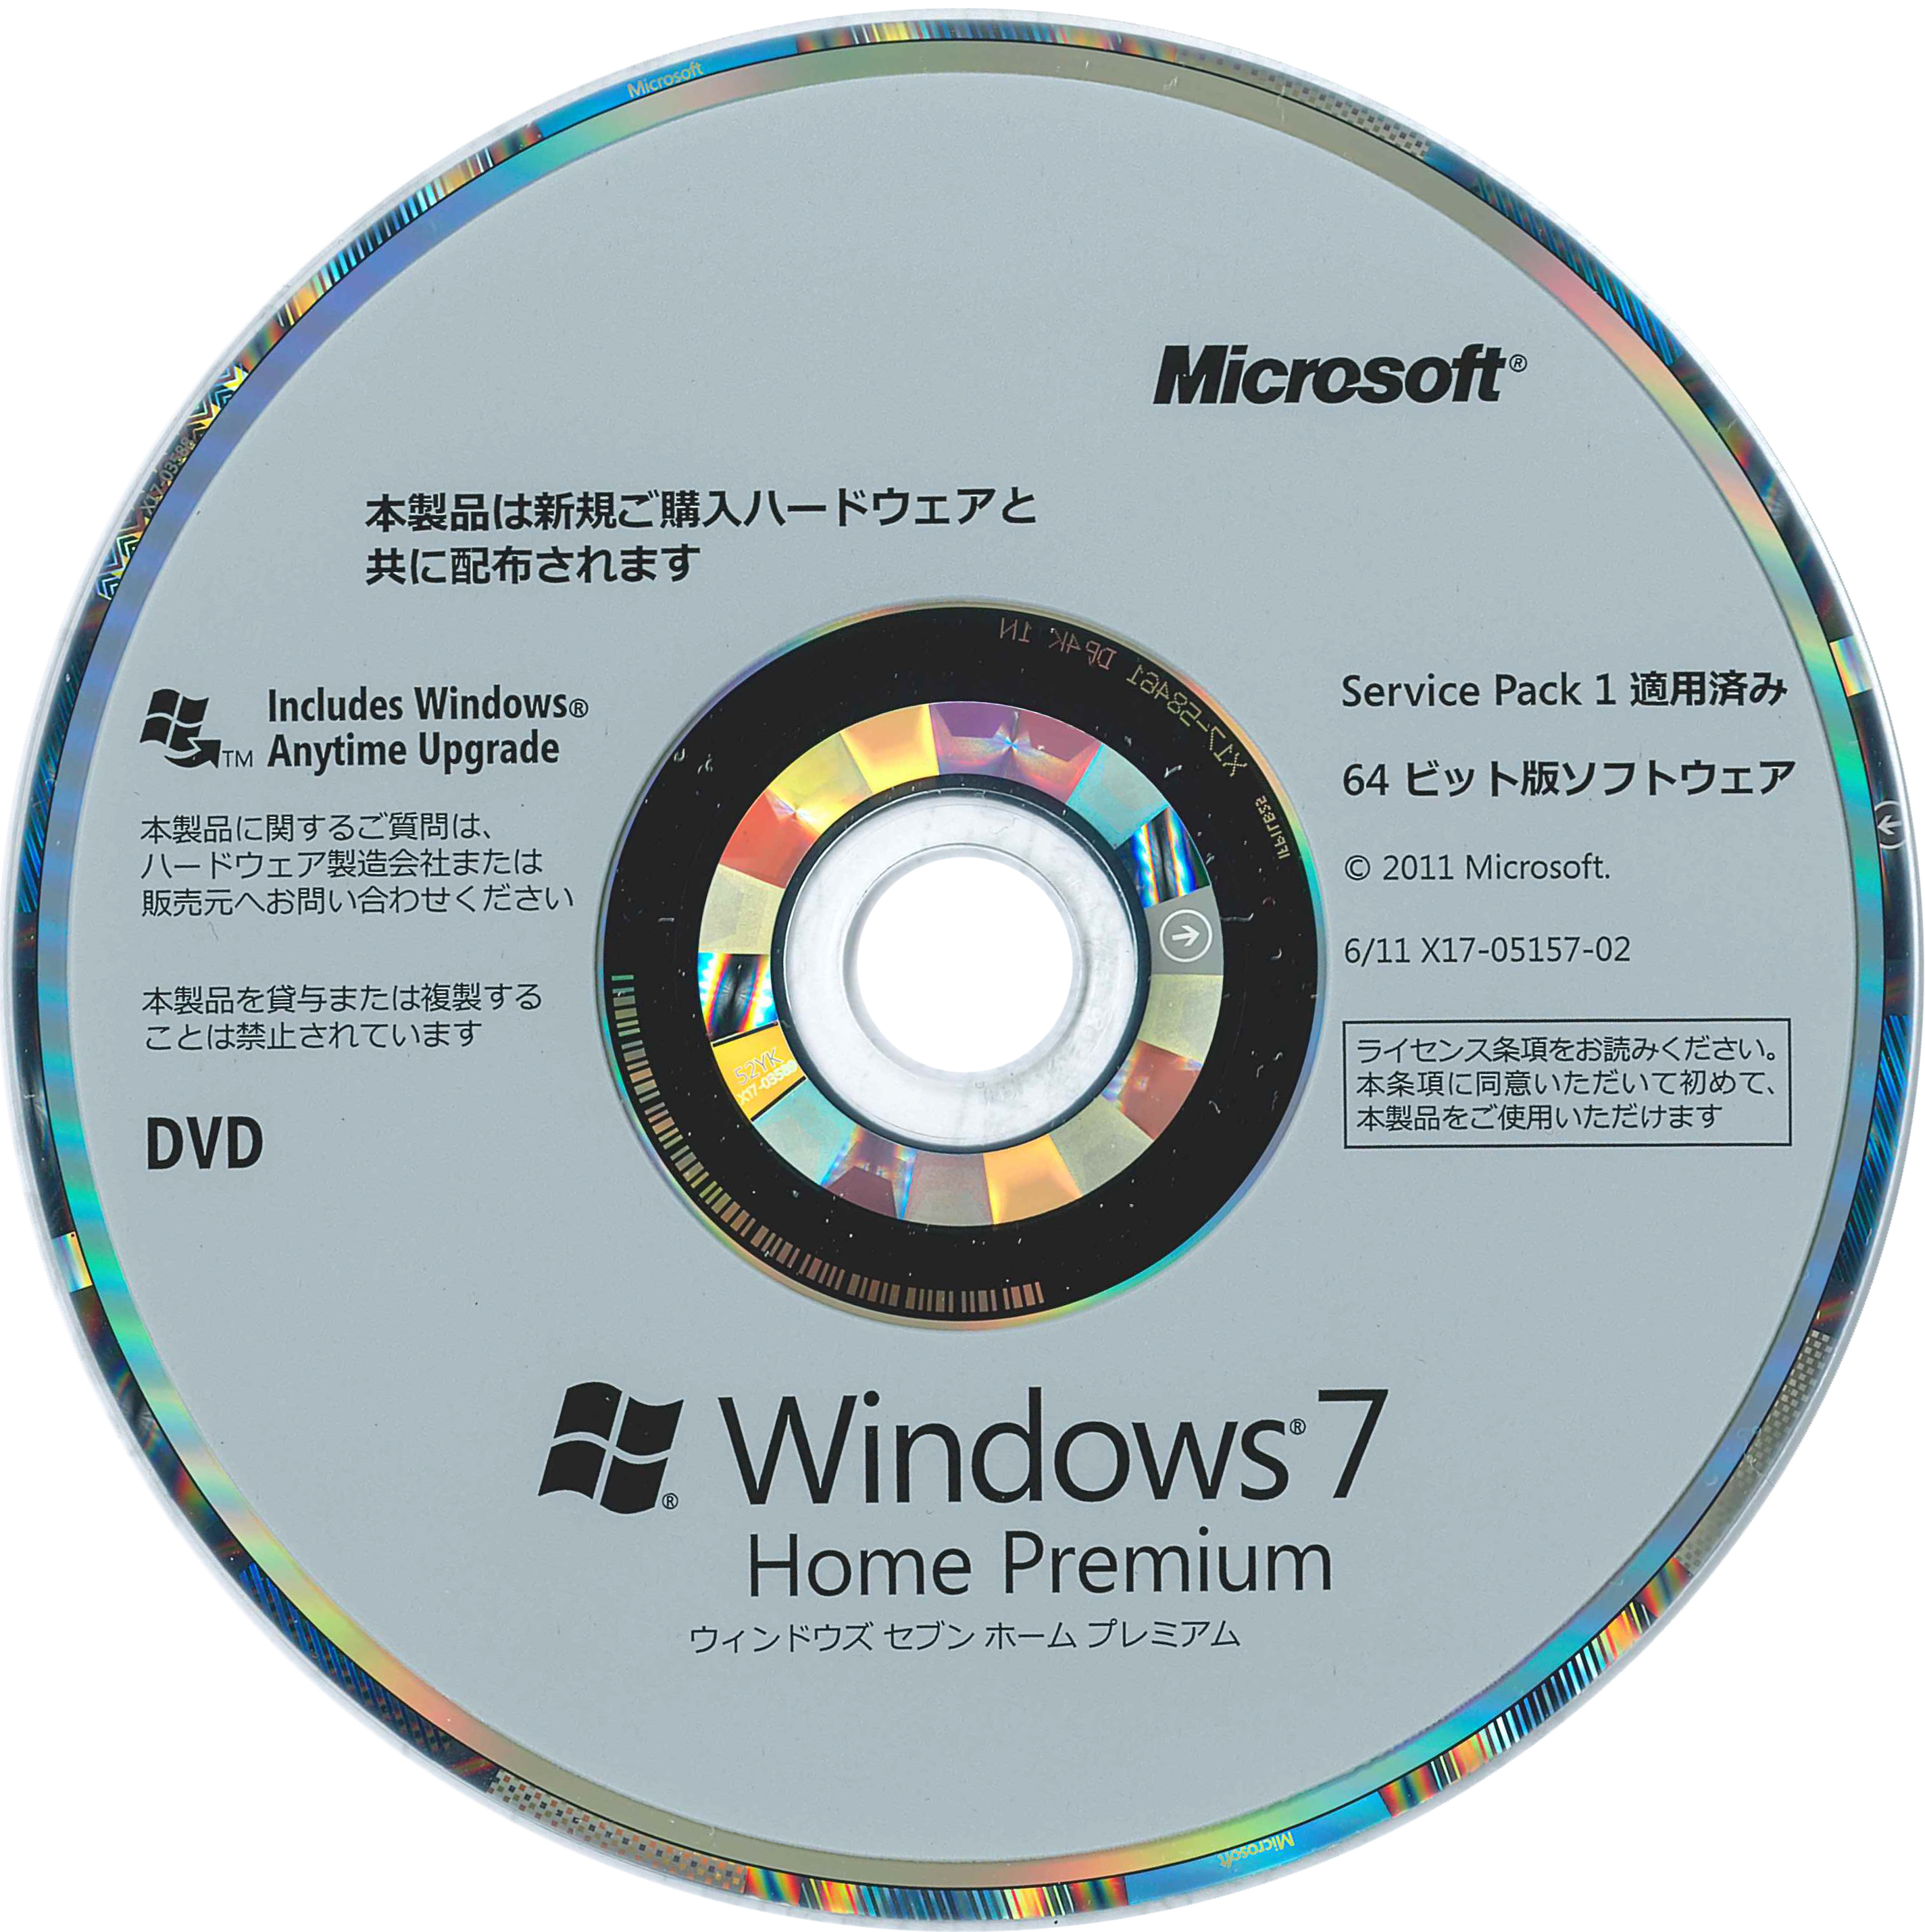 instal the new for windows ContourTrace Premium 2.7.2